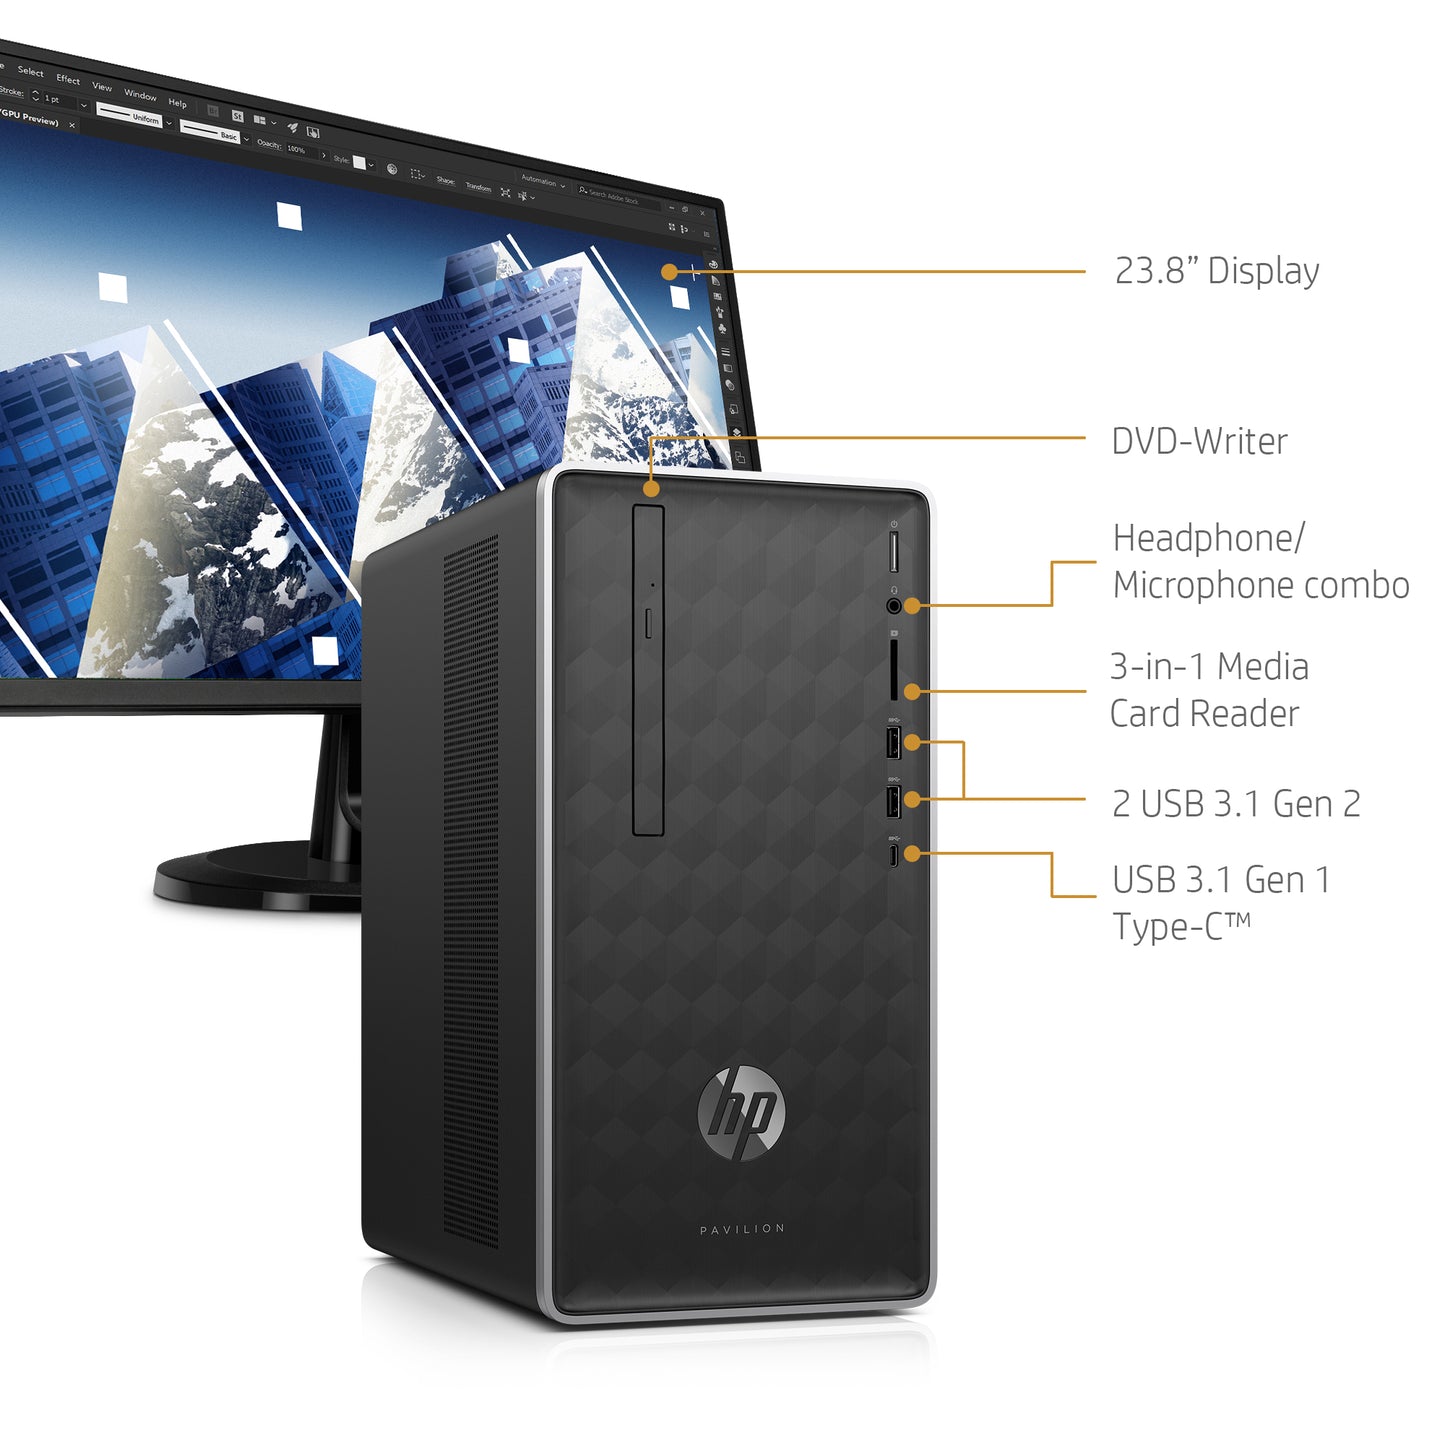 HP Pavilion Desktop Tower Bundle AMD Ryzen 3 - Rekes Sales